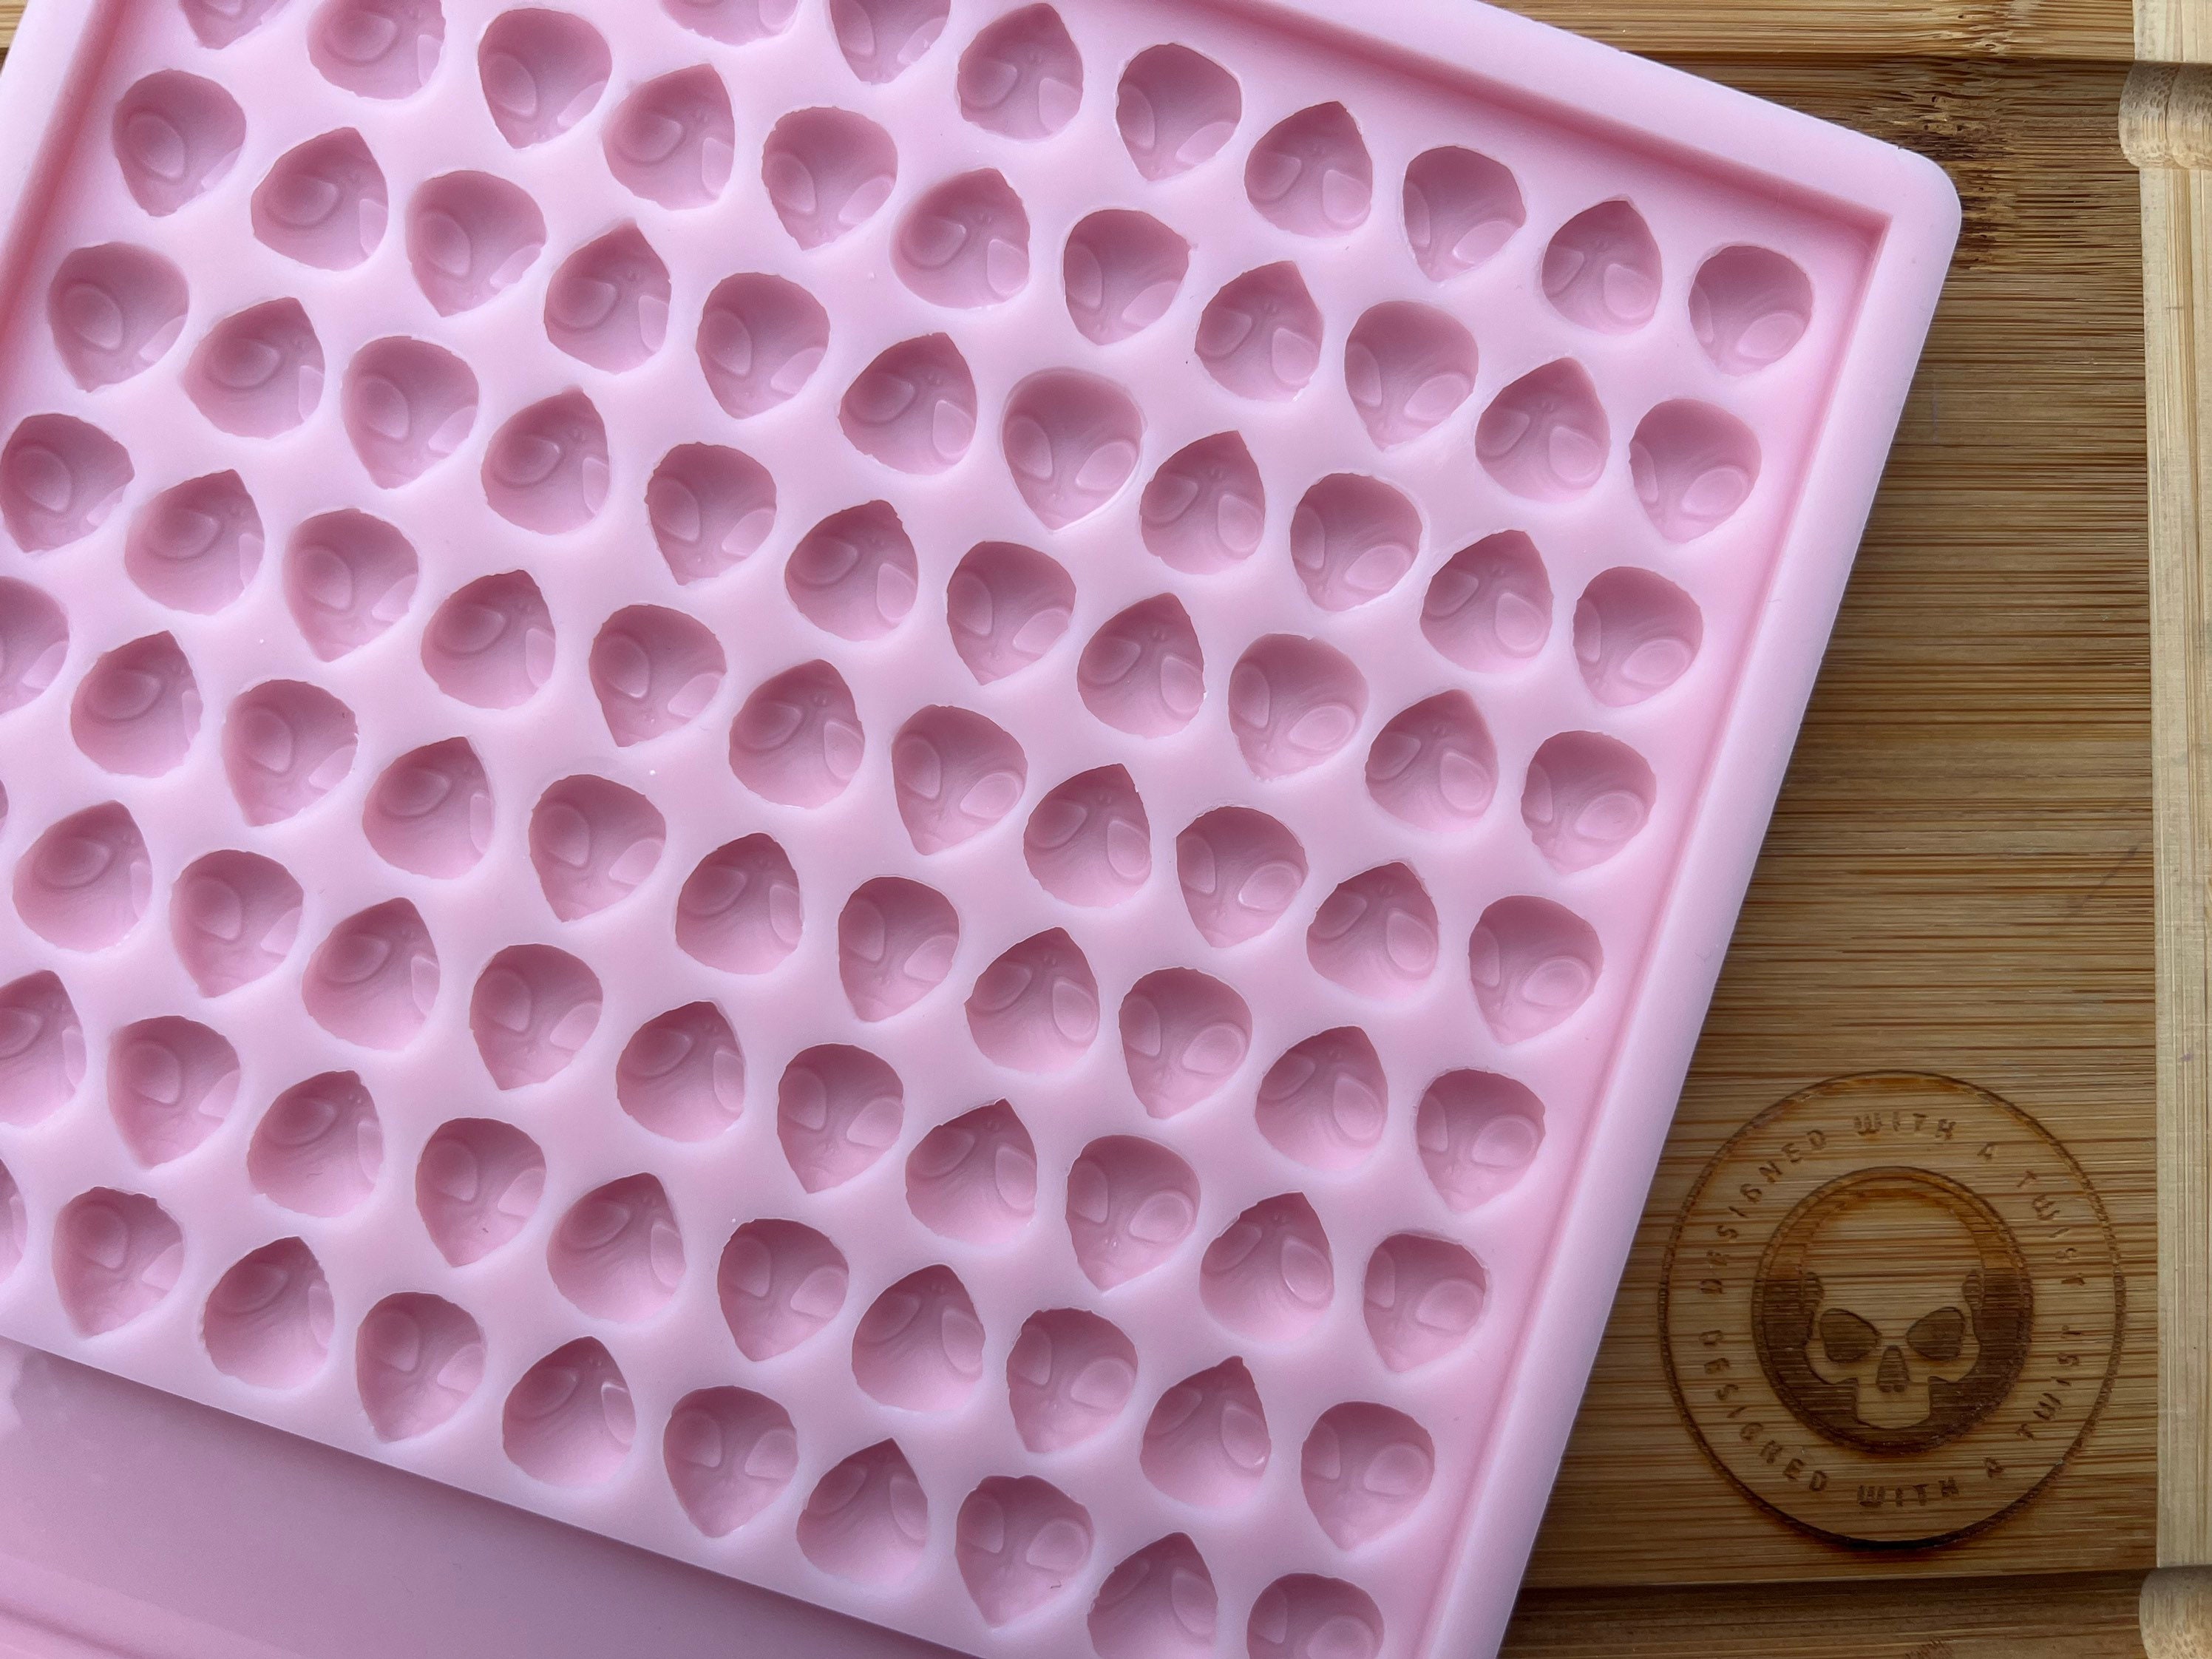 3D Mushroom Scrape n Scoop Wax Silicone Mold – Designed with a Twist